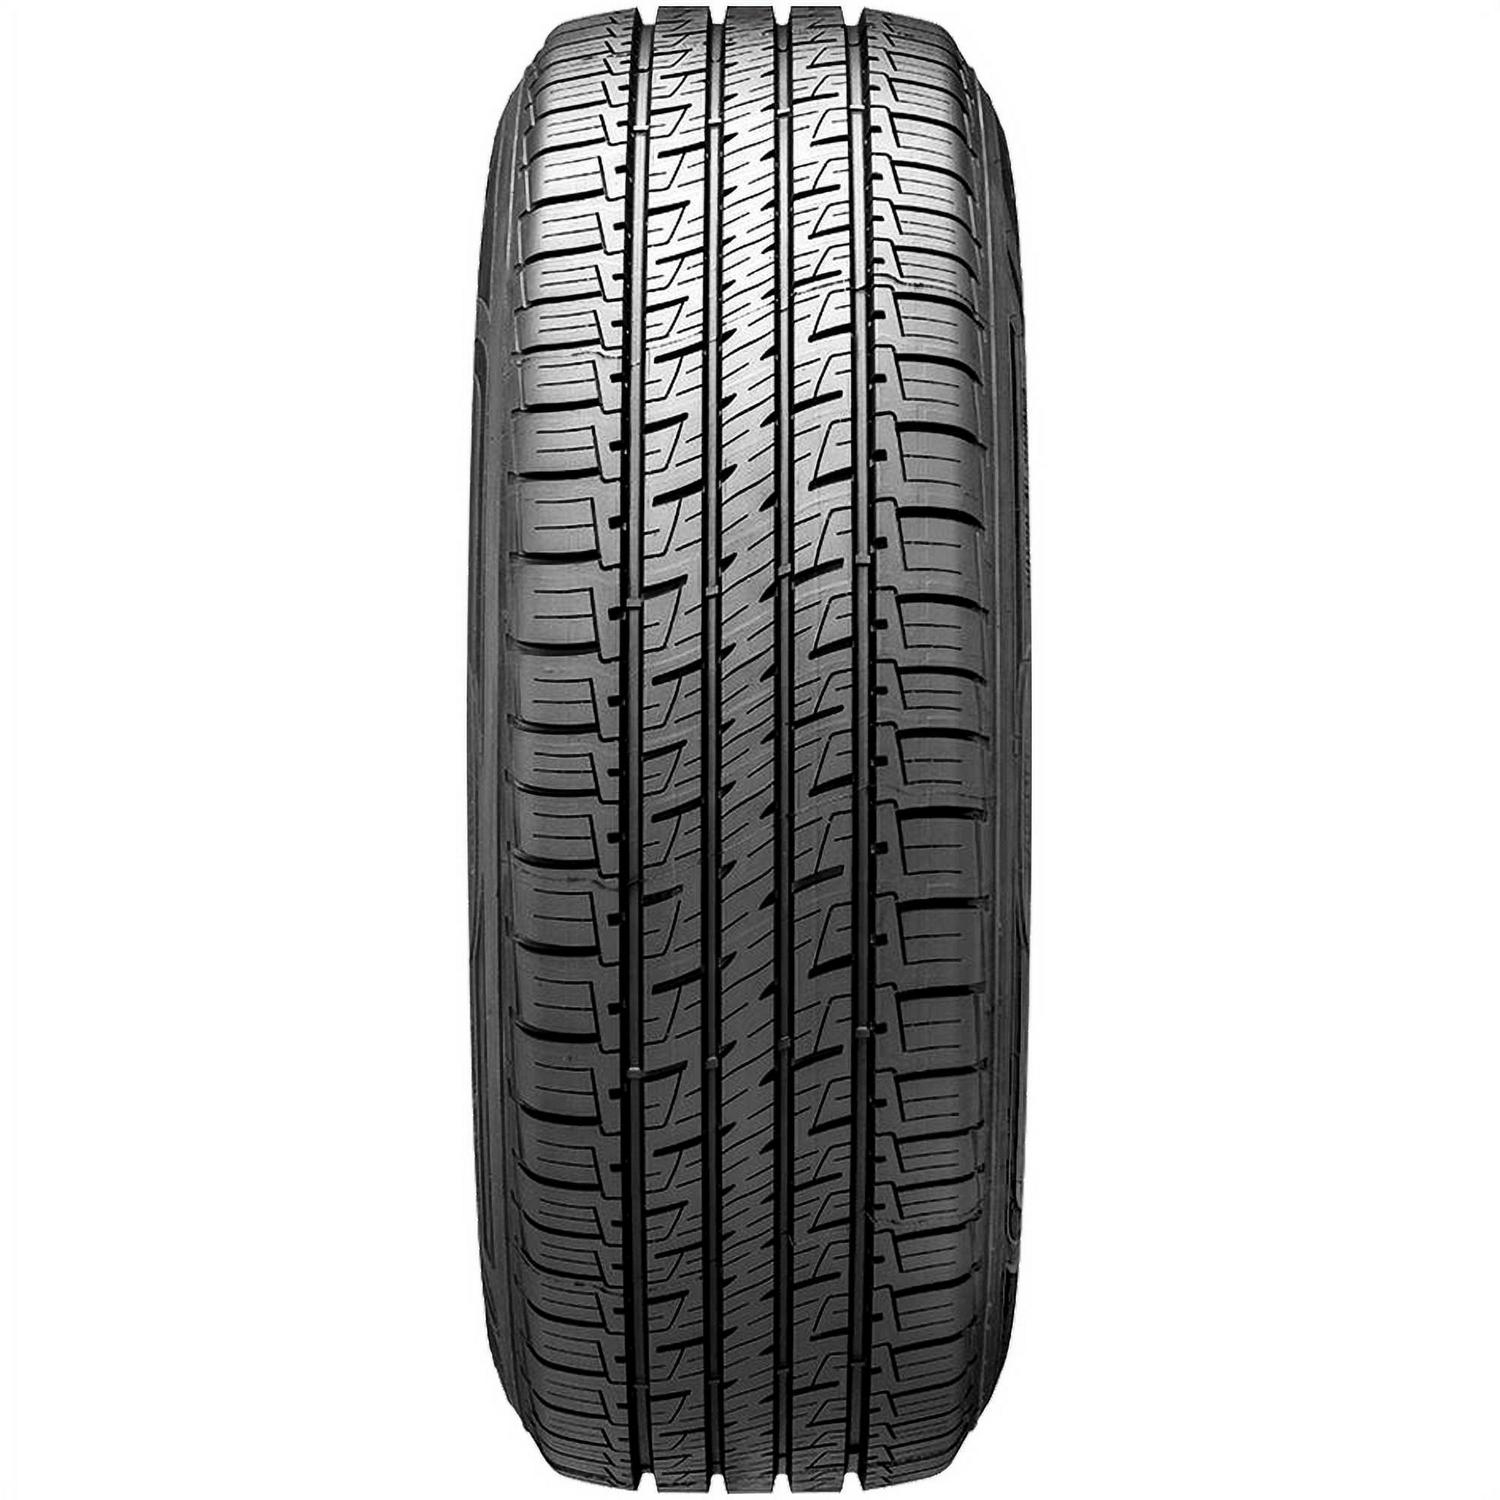 Goodyear Assurance MaxLife 205/50R17 89V A/S All Season Tire